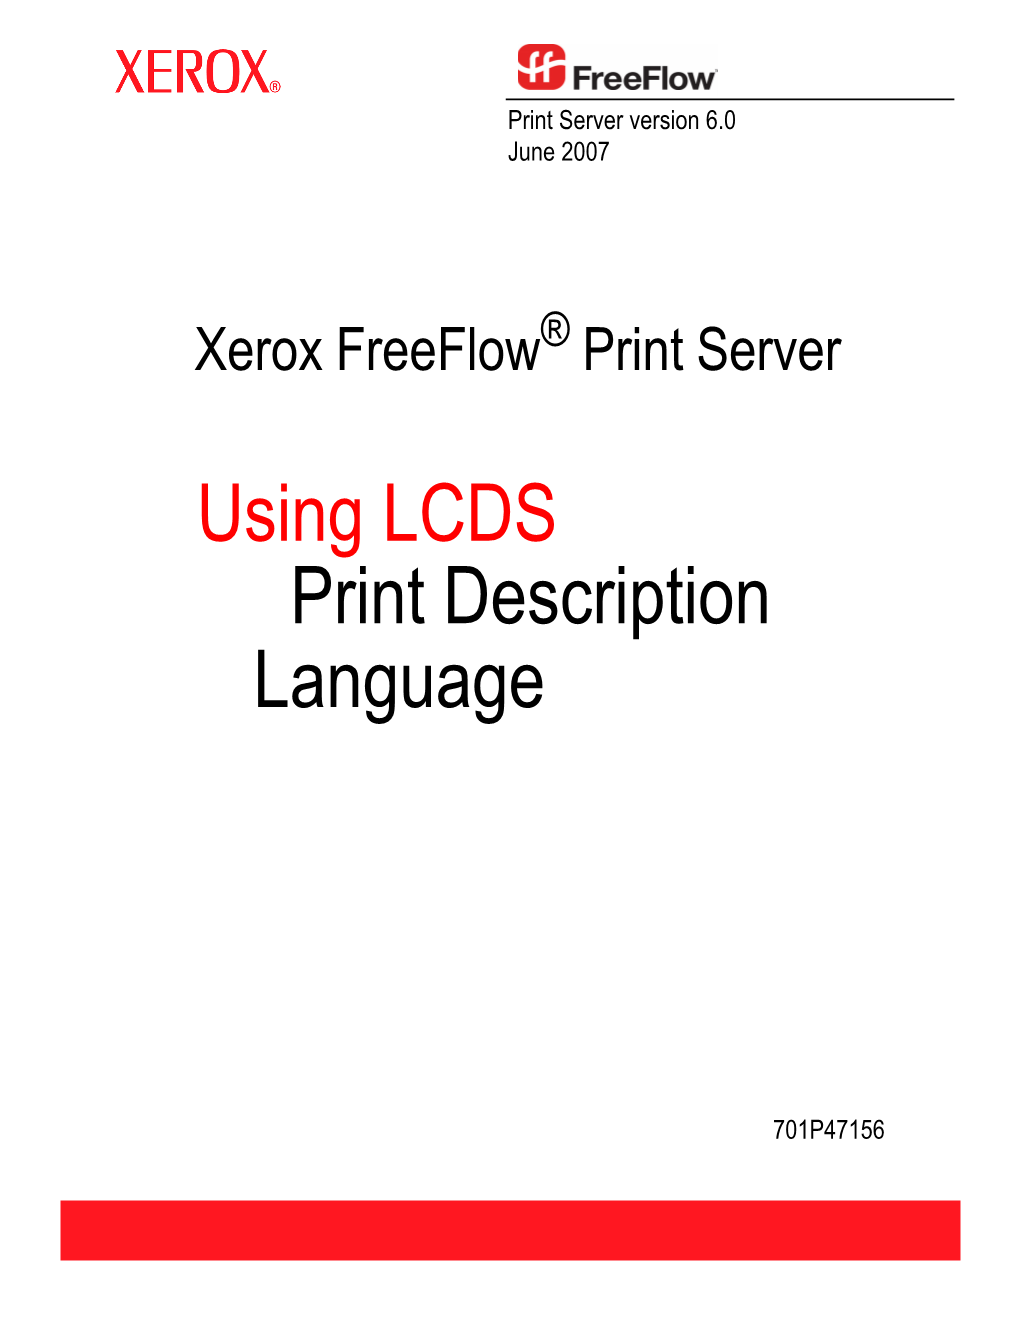 Xerox Freeflow Print Server Using LCDS Print Description Language